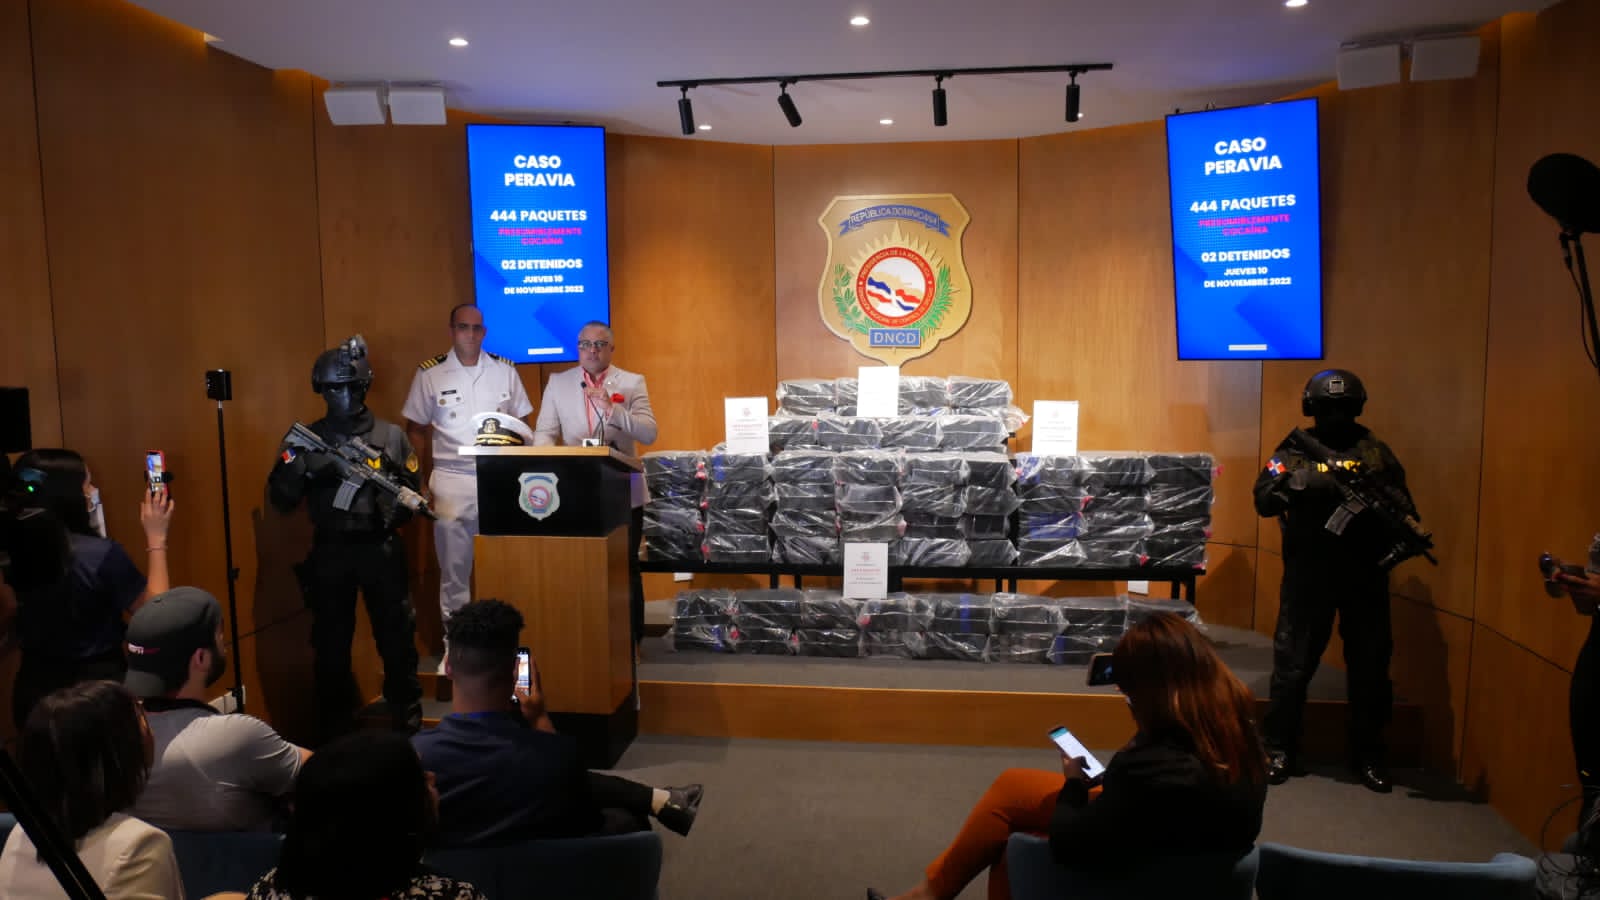 Interceptan lancha con dos hombres a bordo y ocupan 444 paquetes presumiblemente cocaína